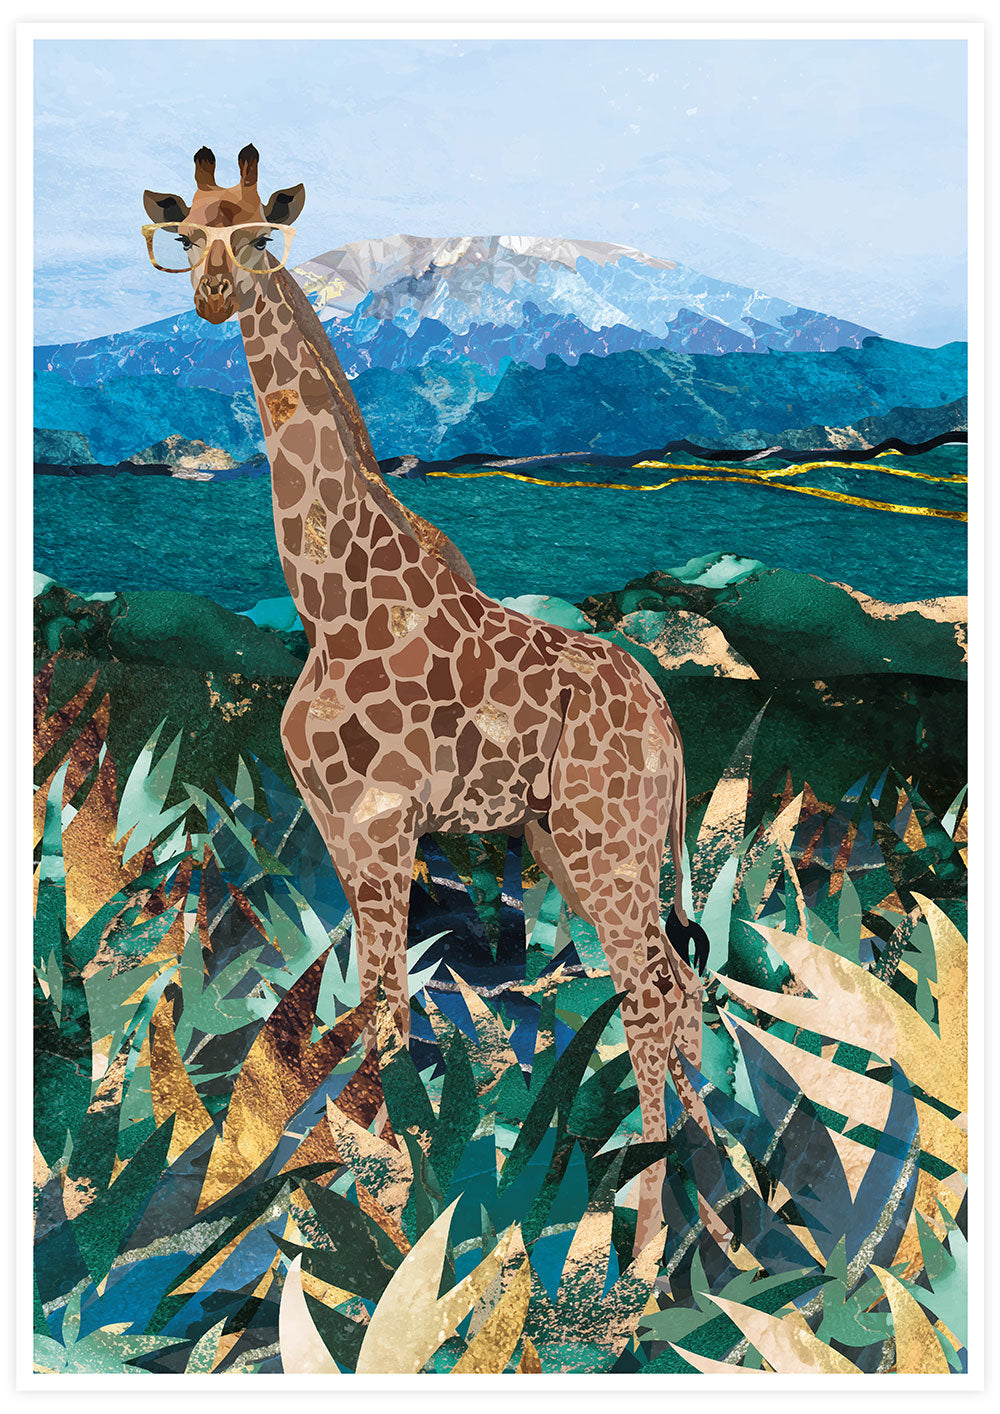 Giraffe in the Wild Art Print by Sarah Manovski